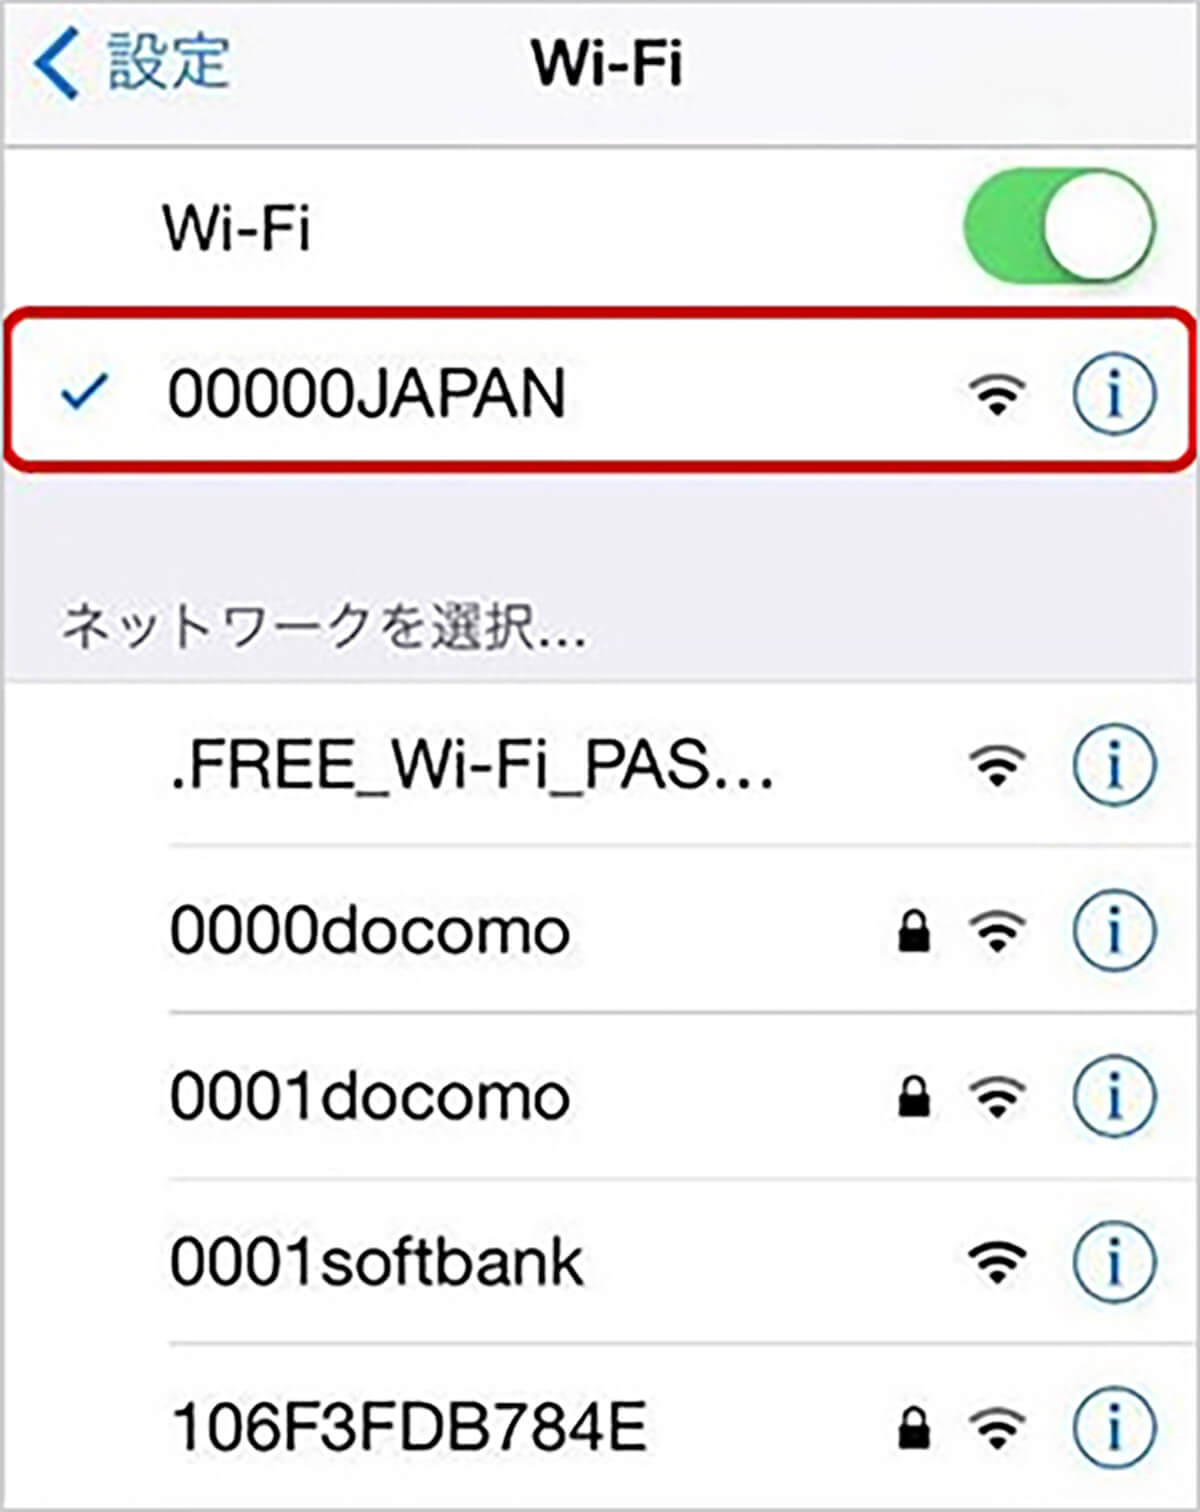 Wi-Fi設定で「00000JAPAN」を選択